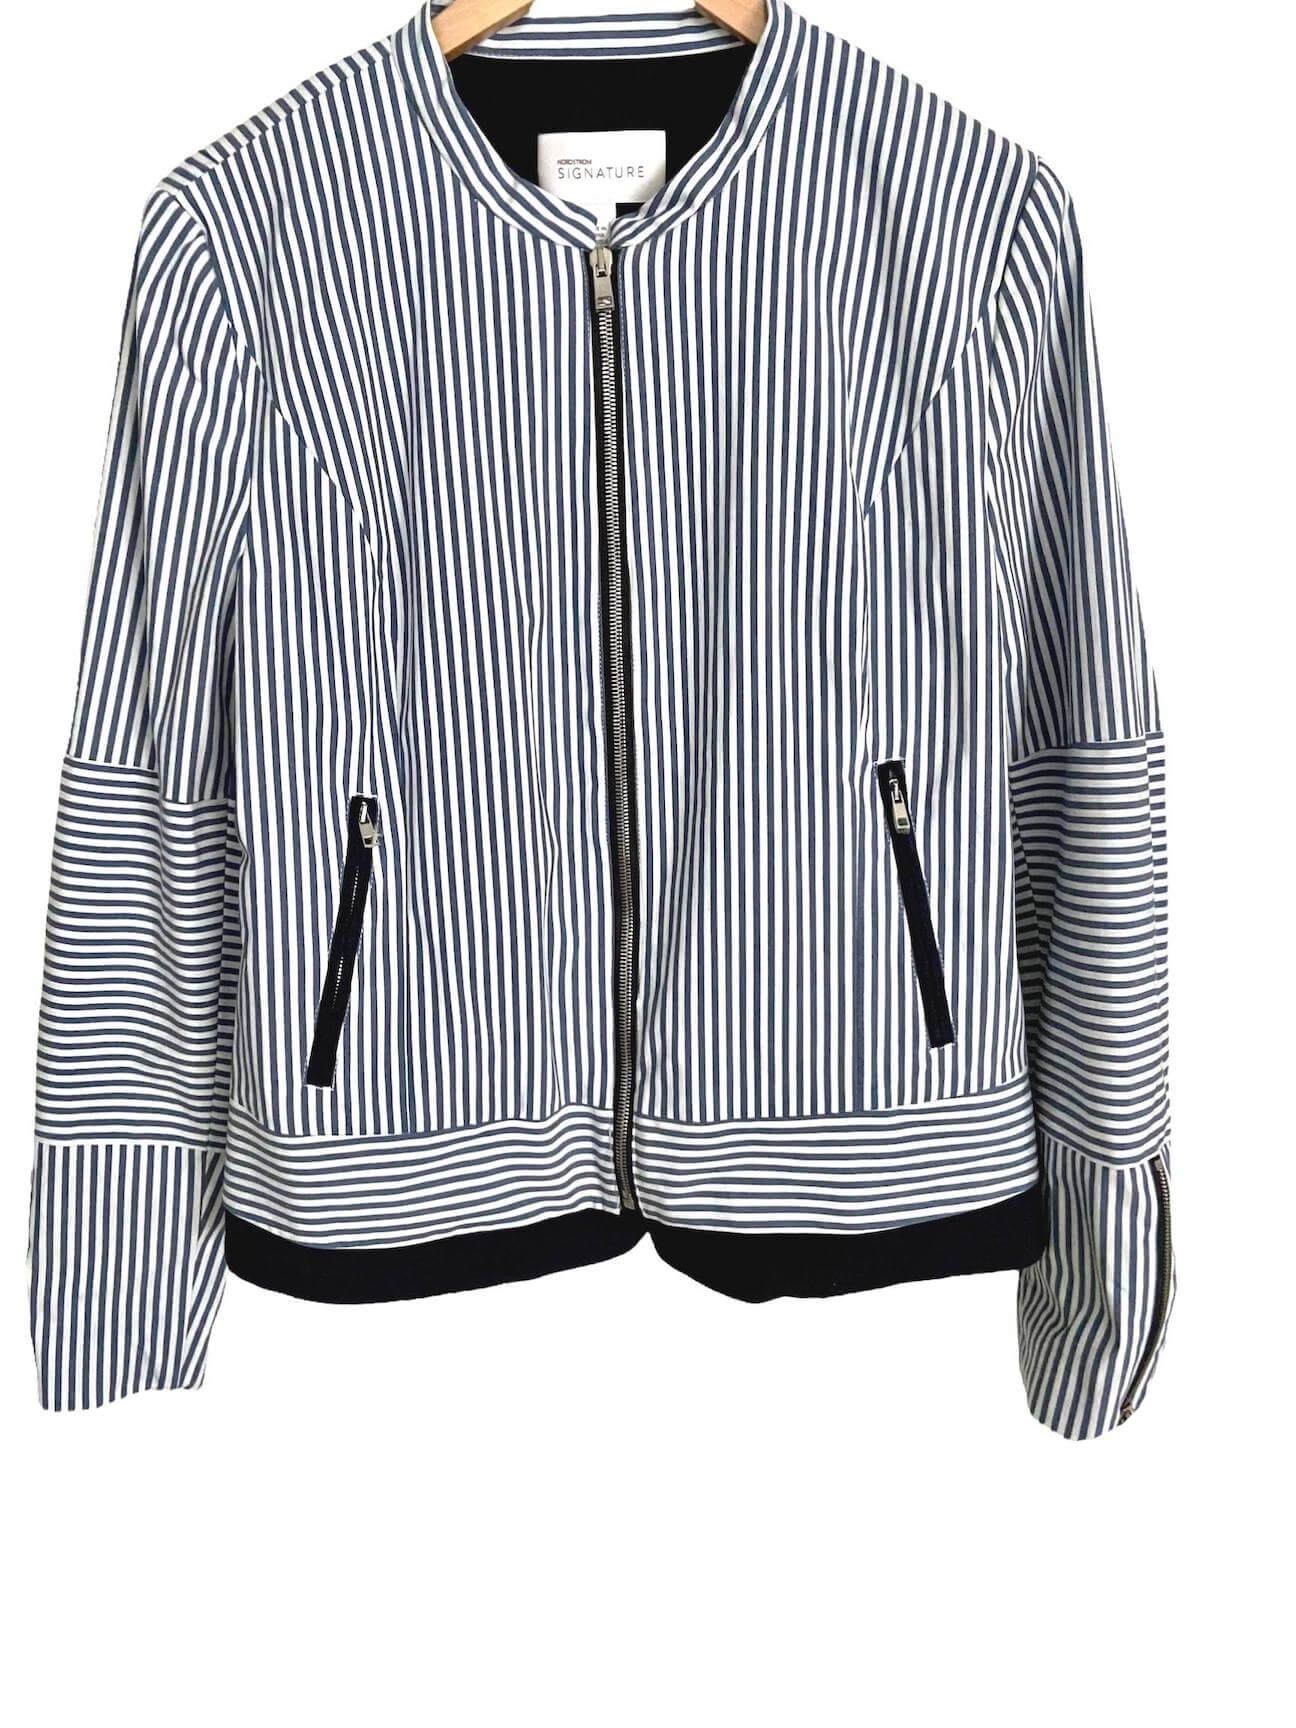 Cool Summer NORDSTROM SIGNATURE striped jacket